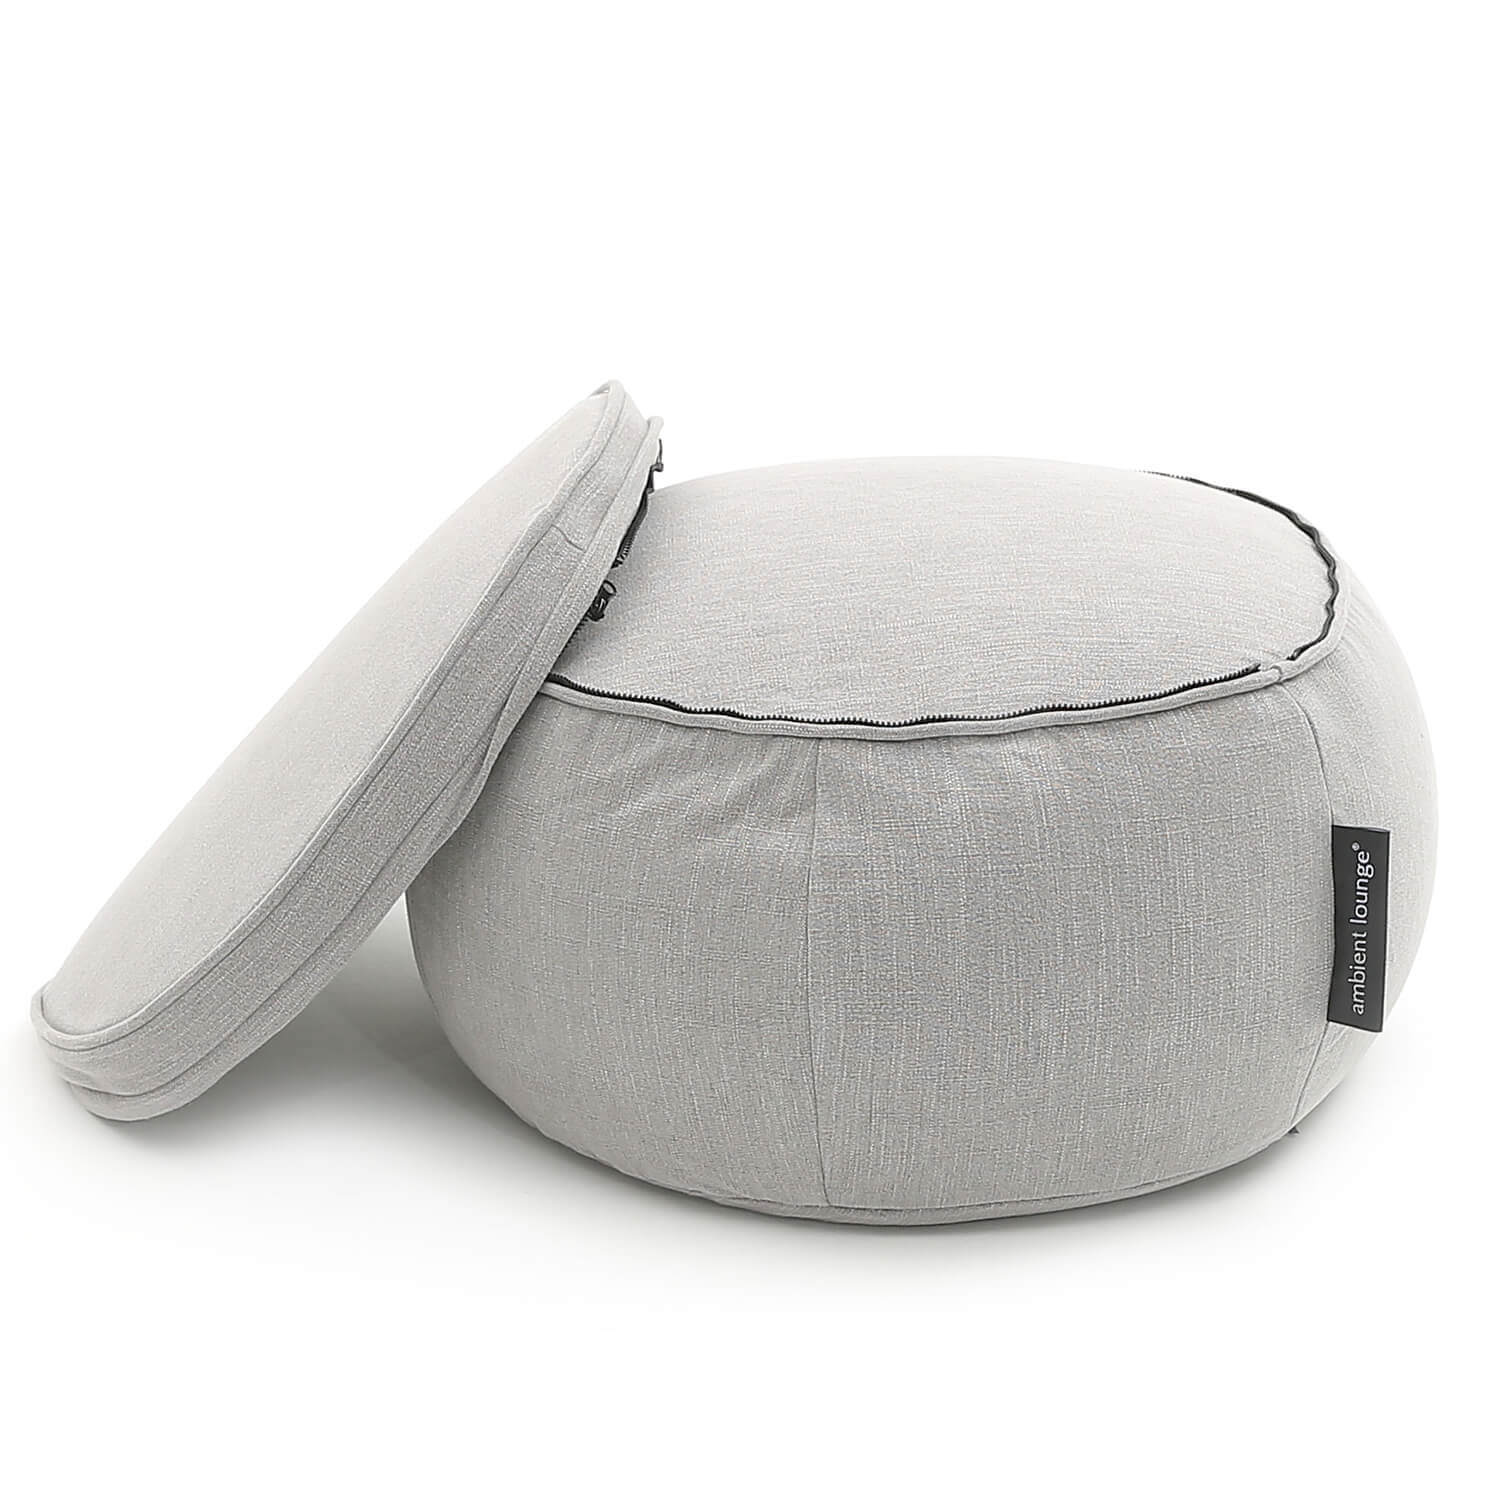 Wing ottoman bean bag in Keystone Grey with cushion unzipped